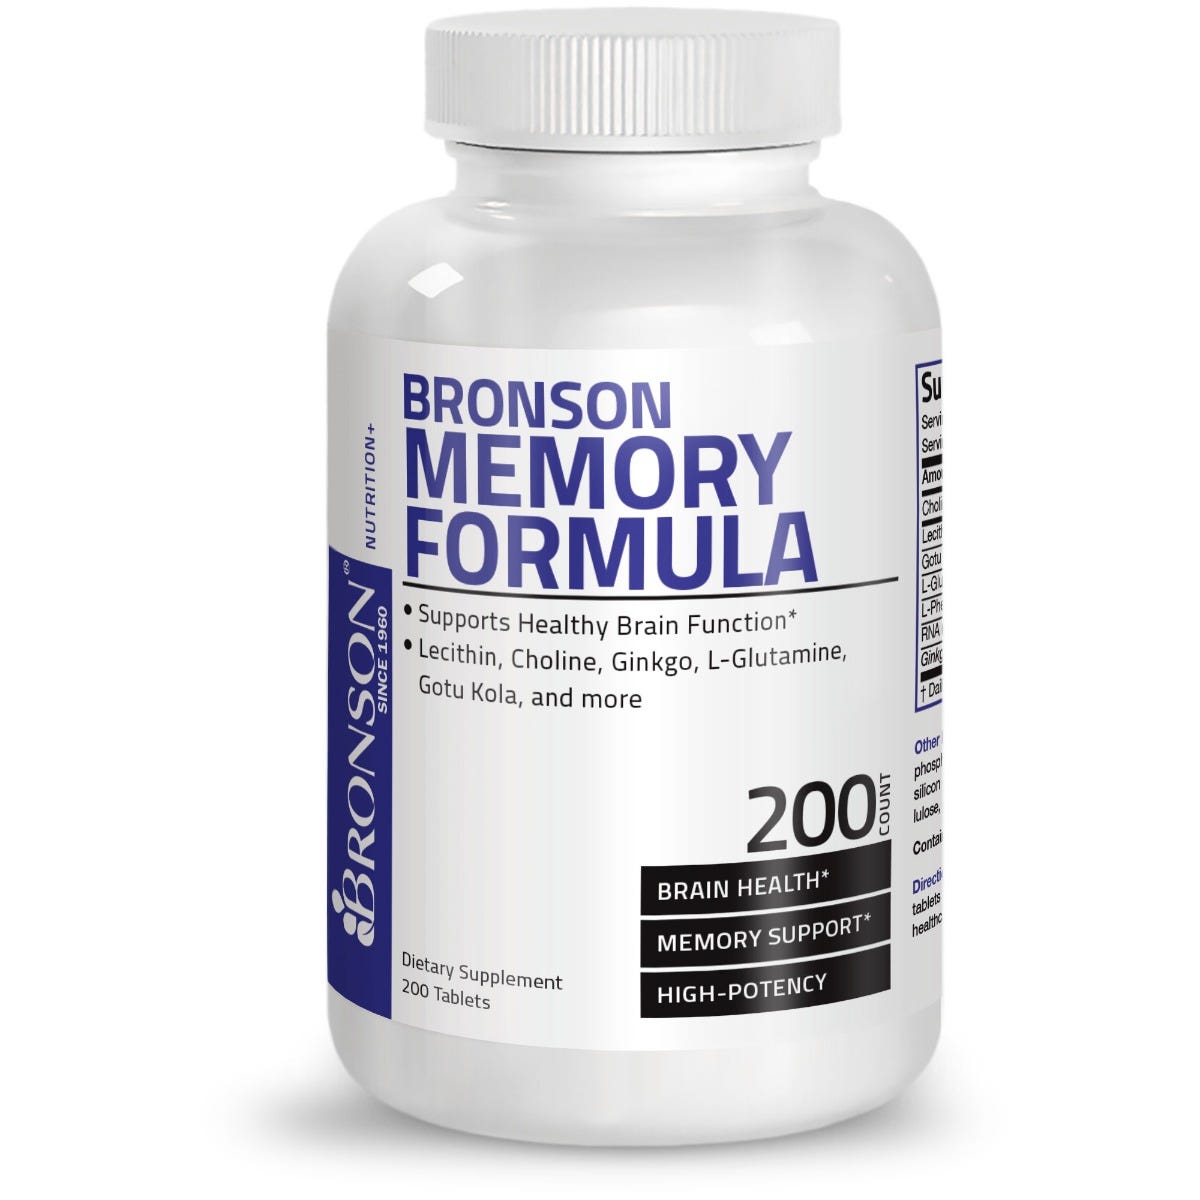 Bronson Memory Formula - 200 Tablets view 1 of 6